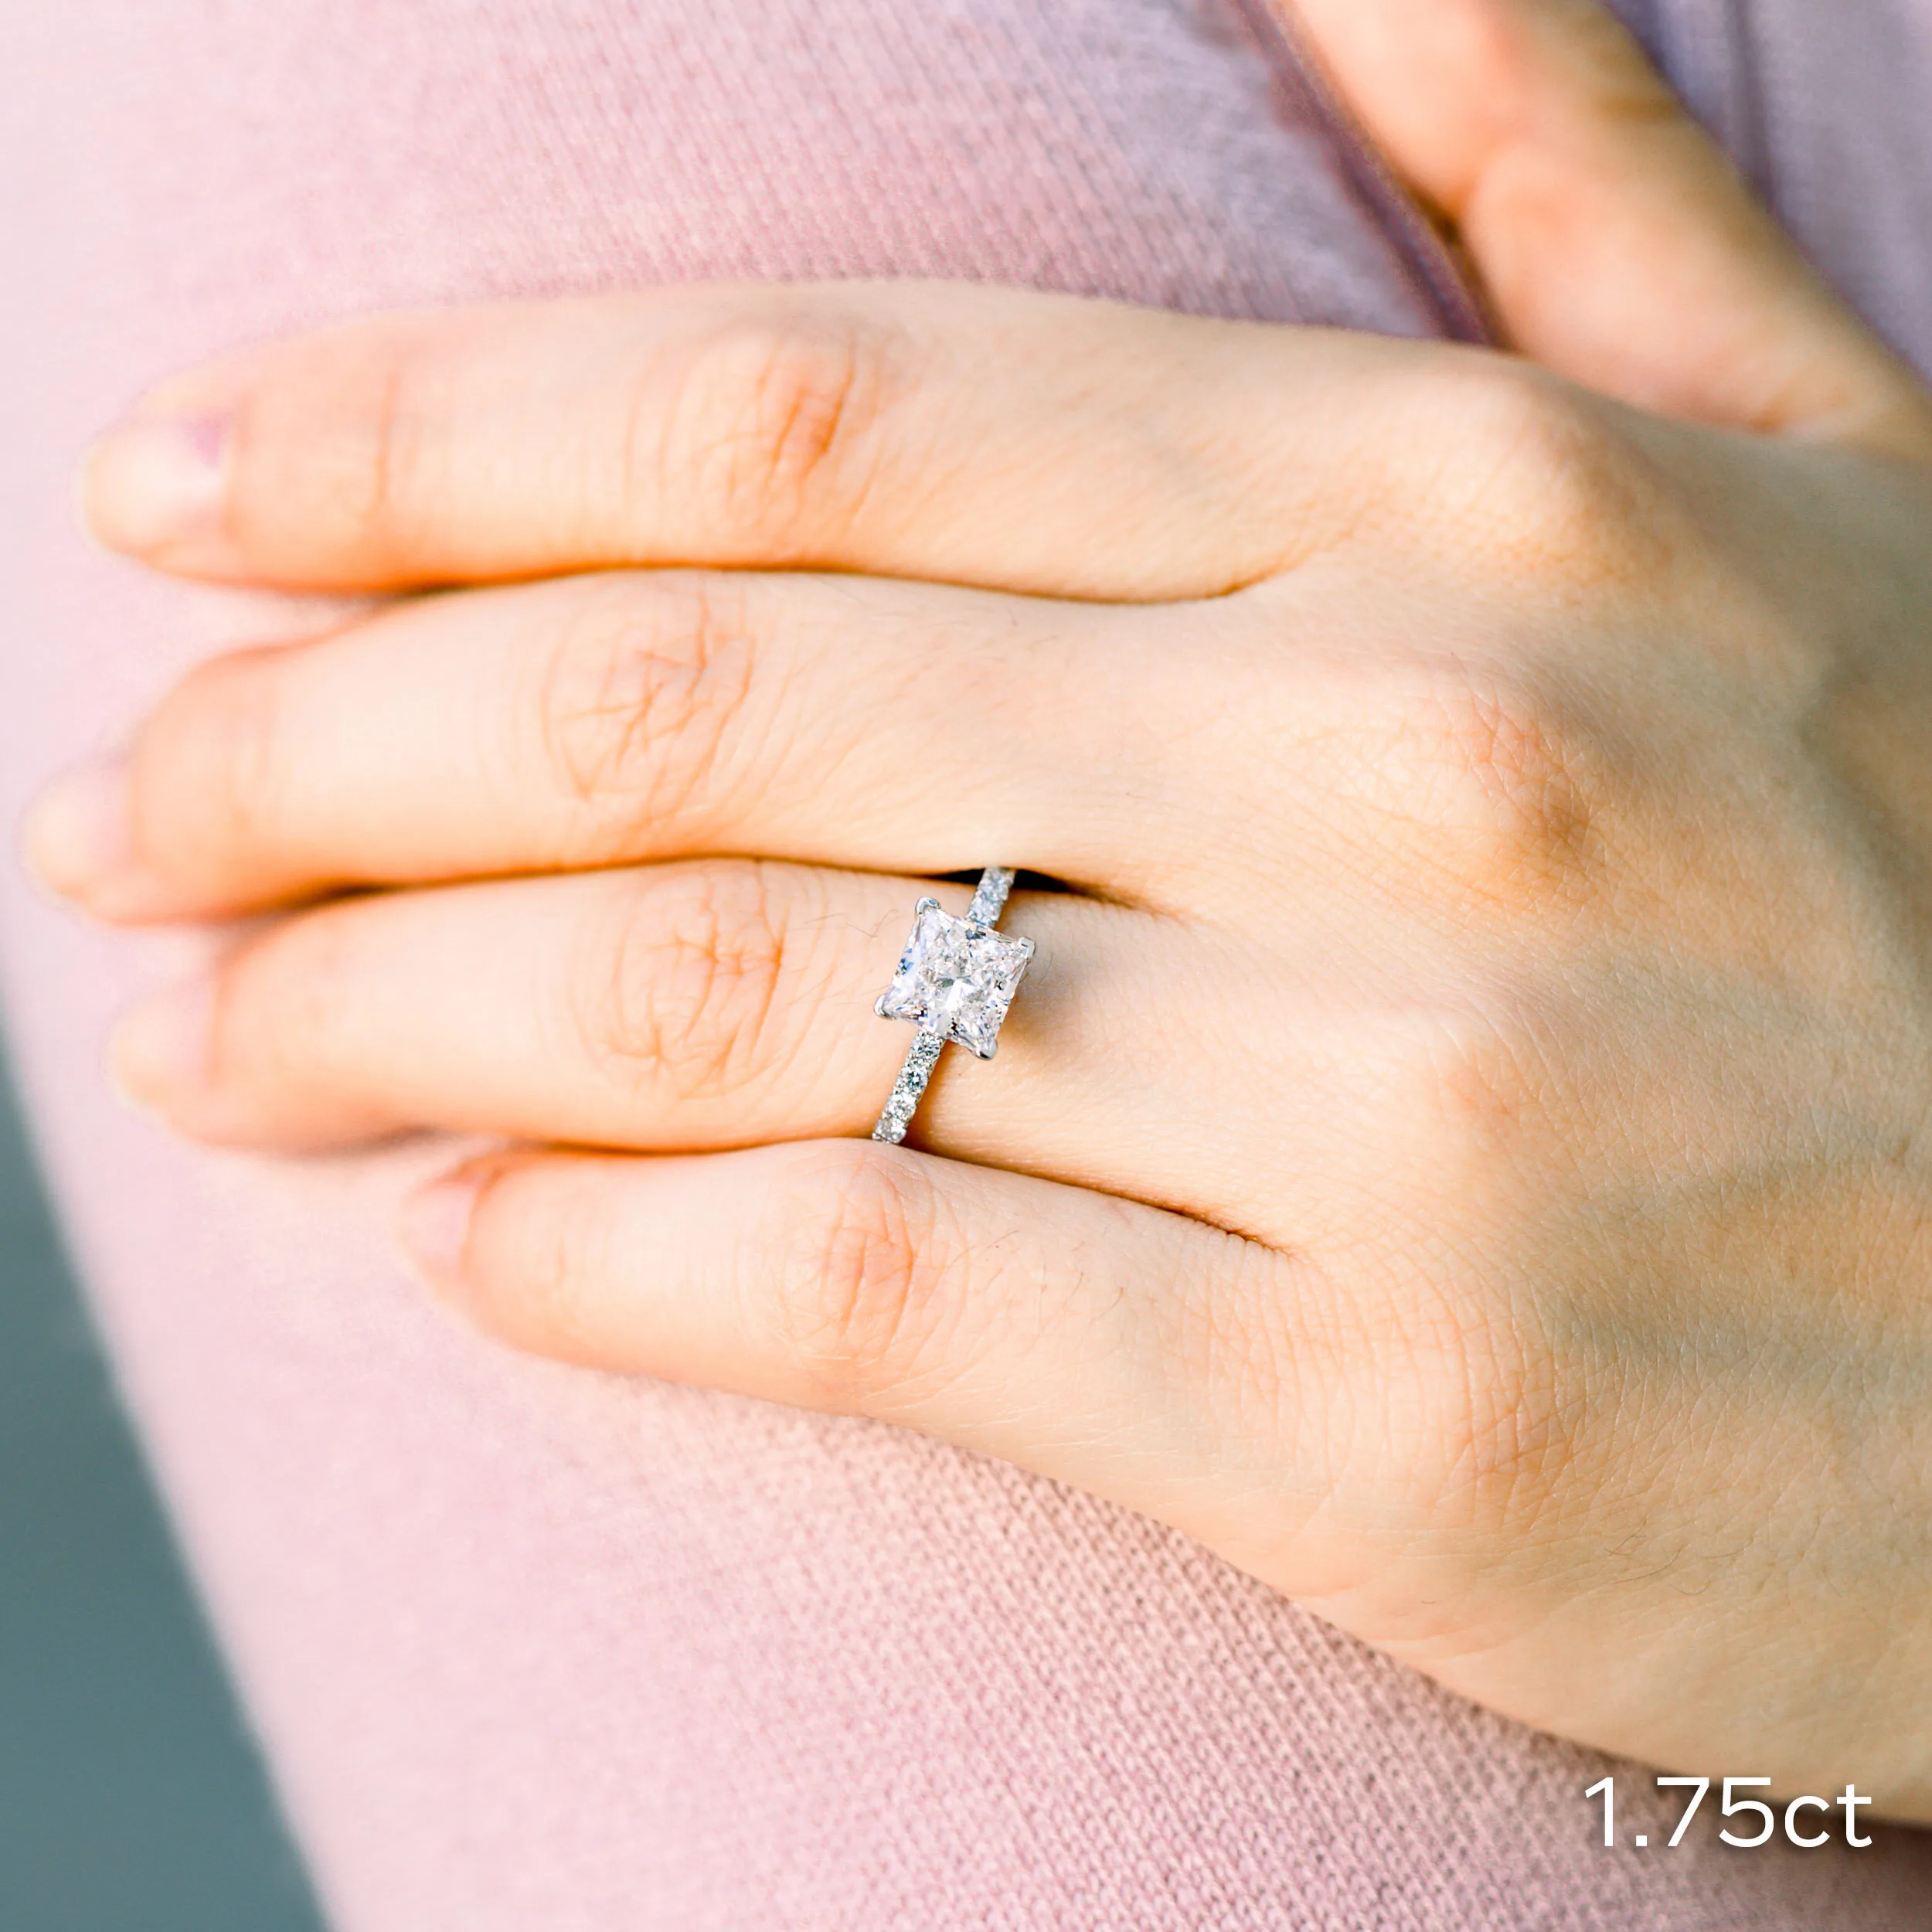 Platinum 1.75ct Princess Cut Lab Diamond Engagement Ring with Thin Diamond Band Ada Diamonds Design AD-150 on Hand